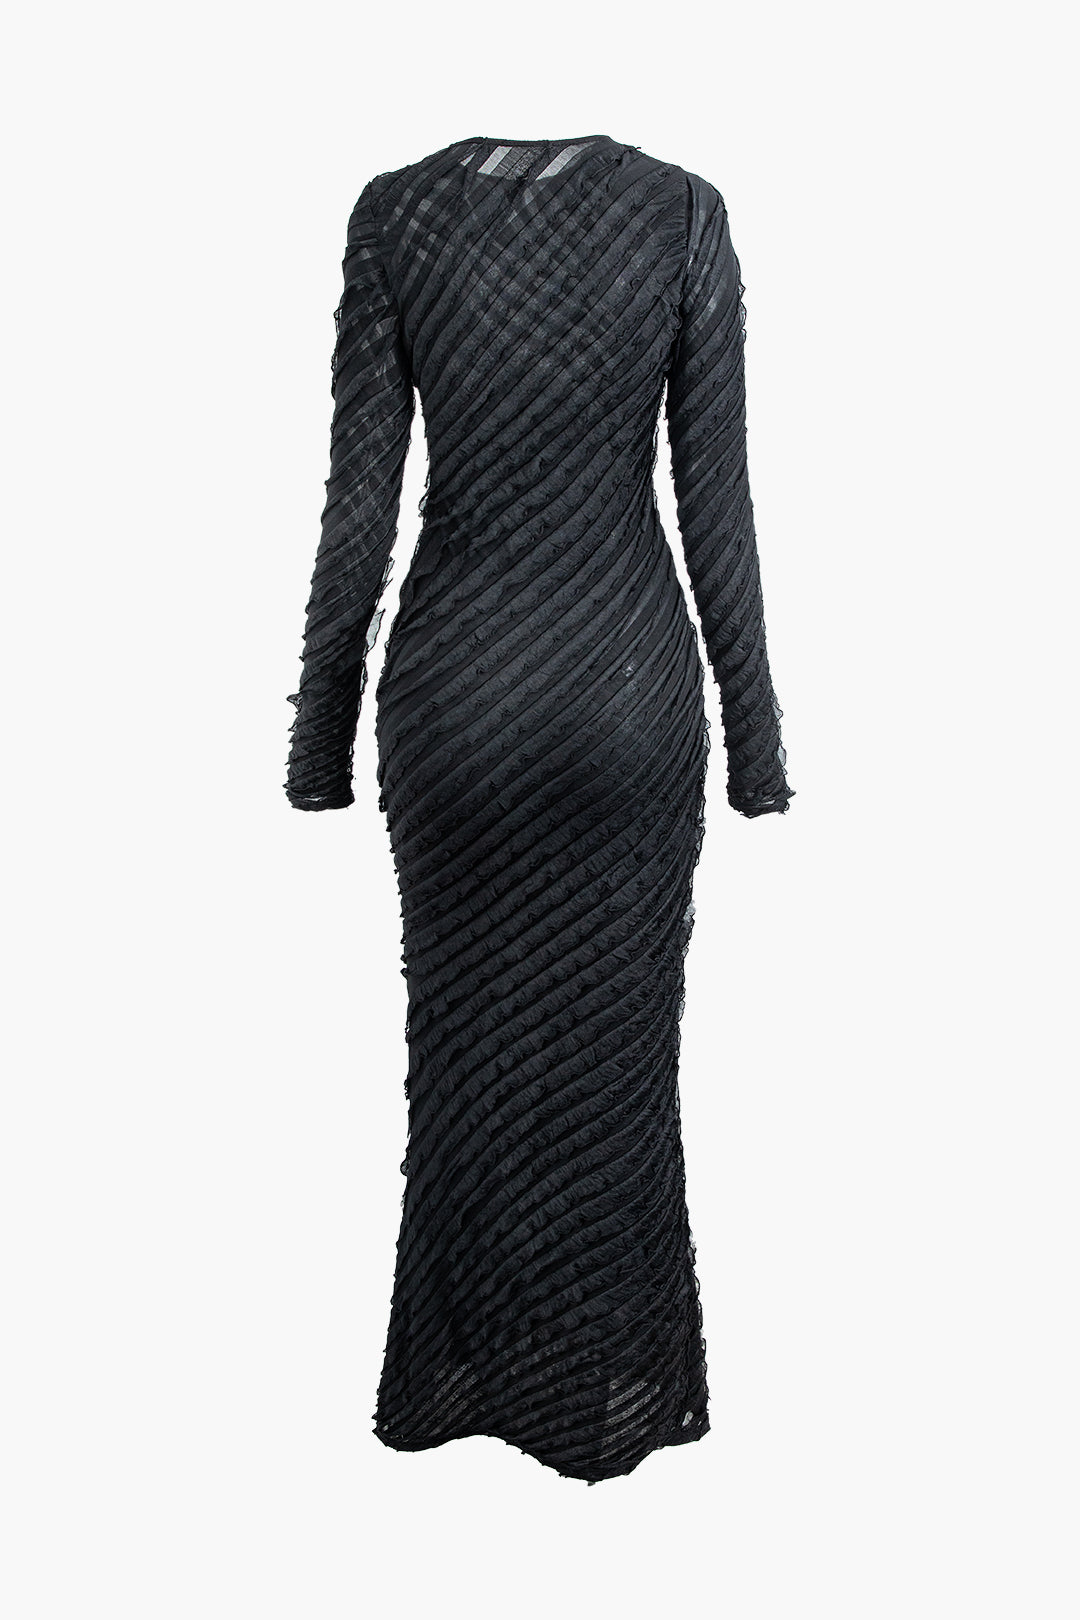 Textured Round Neck Long Sleeve Maxi Dress